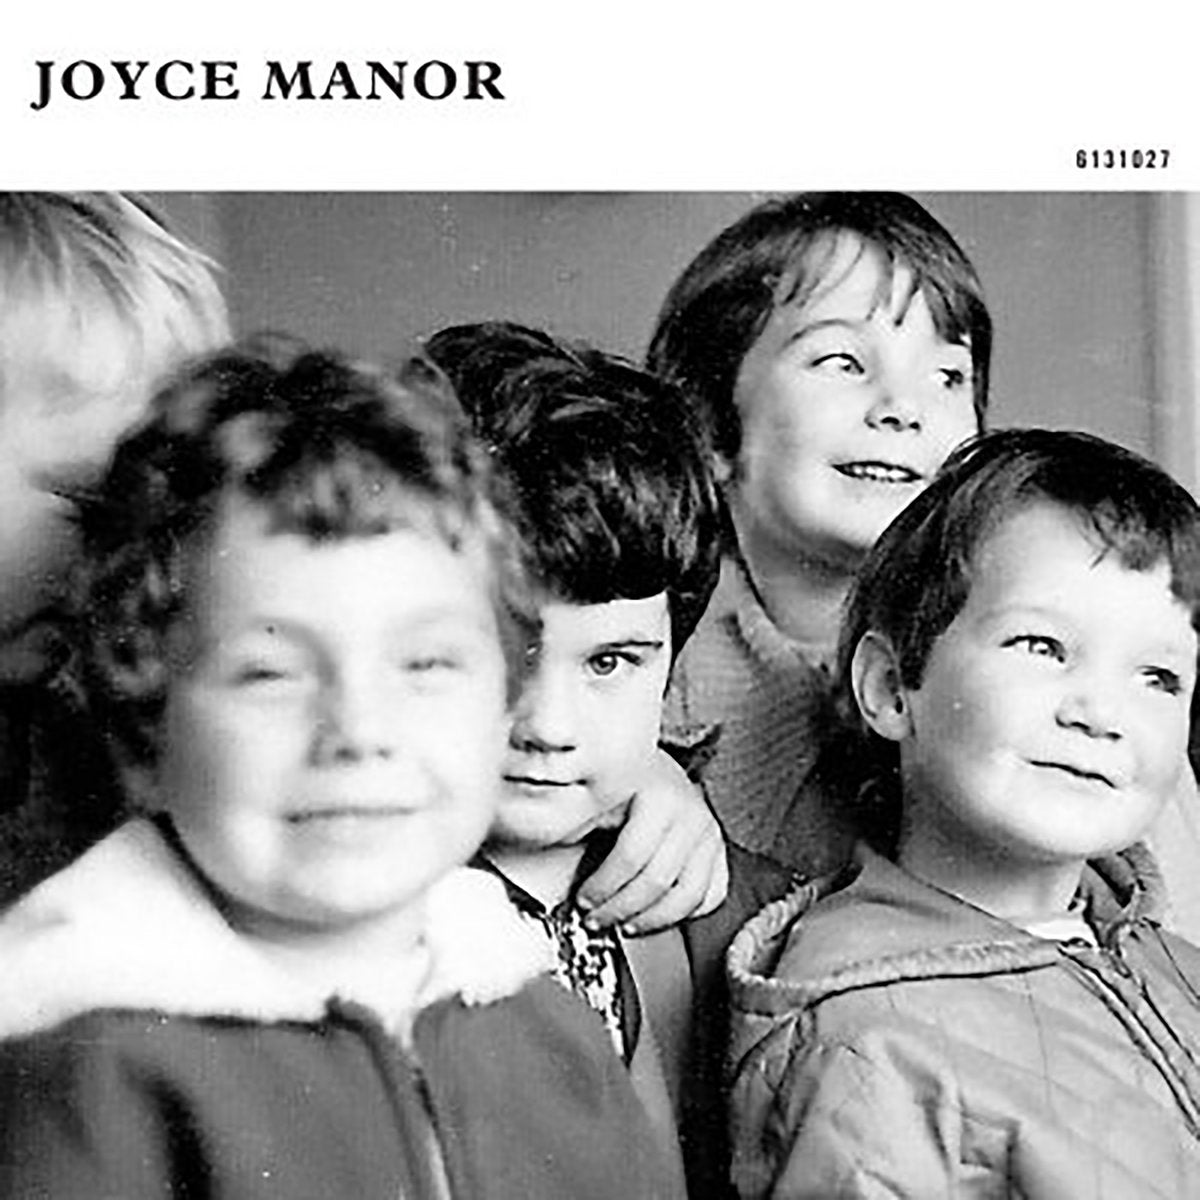 Joyce Manor "Self Titled" LP